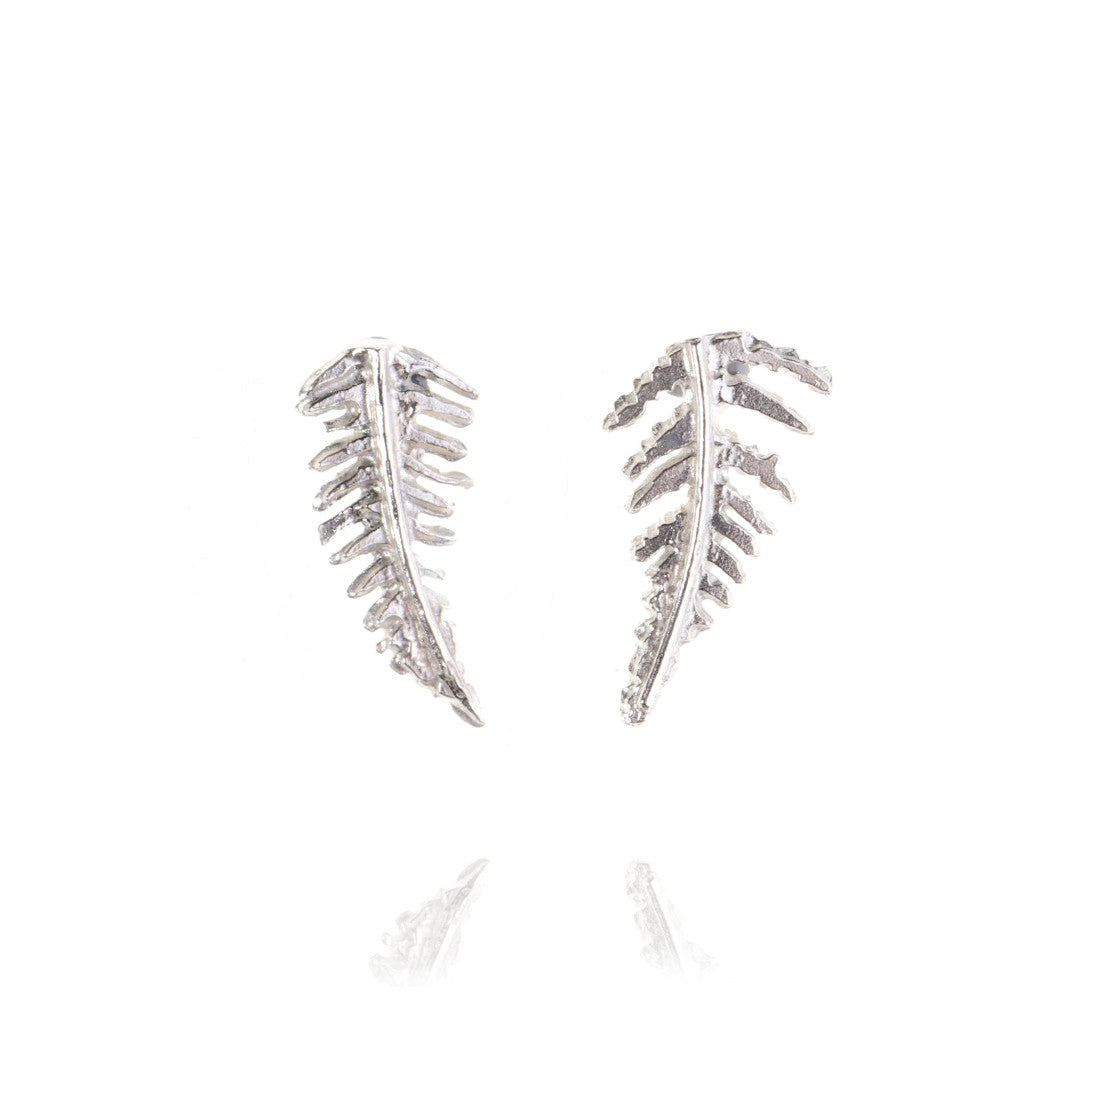 Botanical Fern Stud Earrings